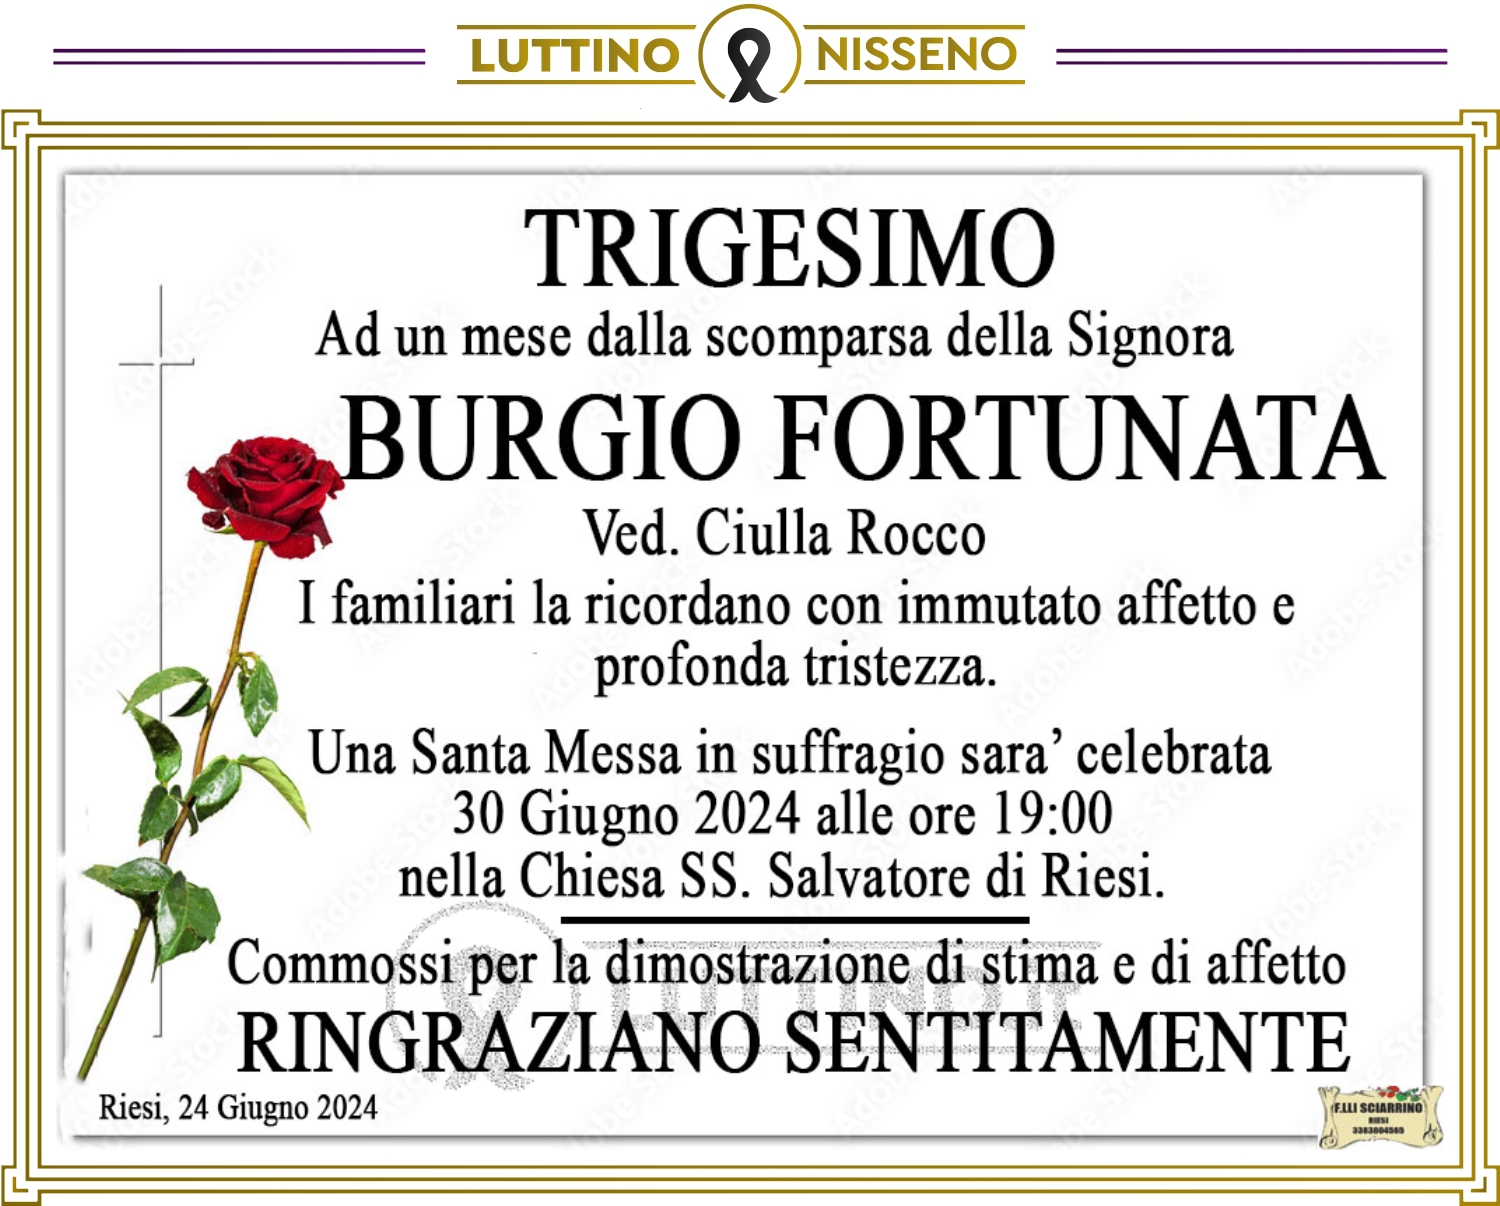 Fortunata Burgio